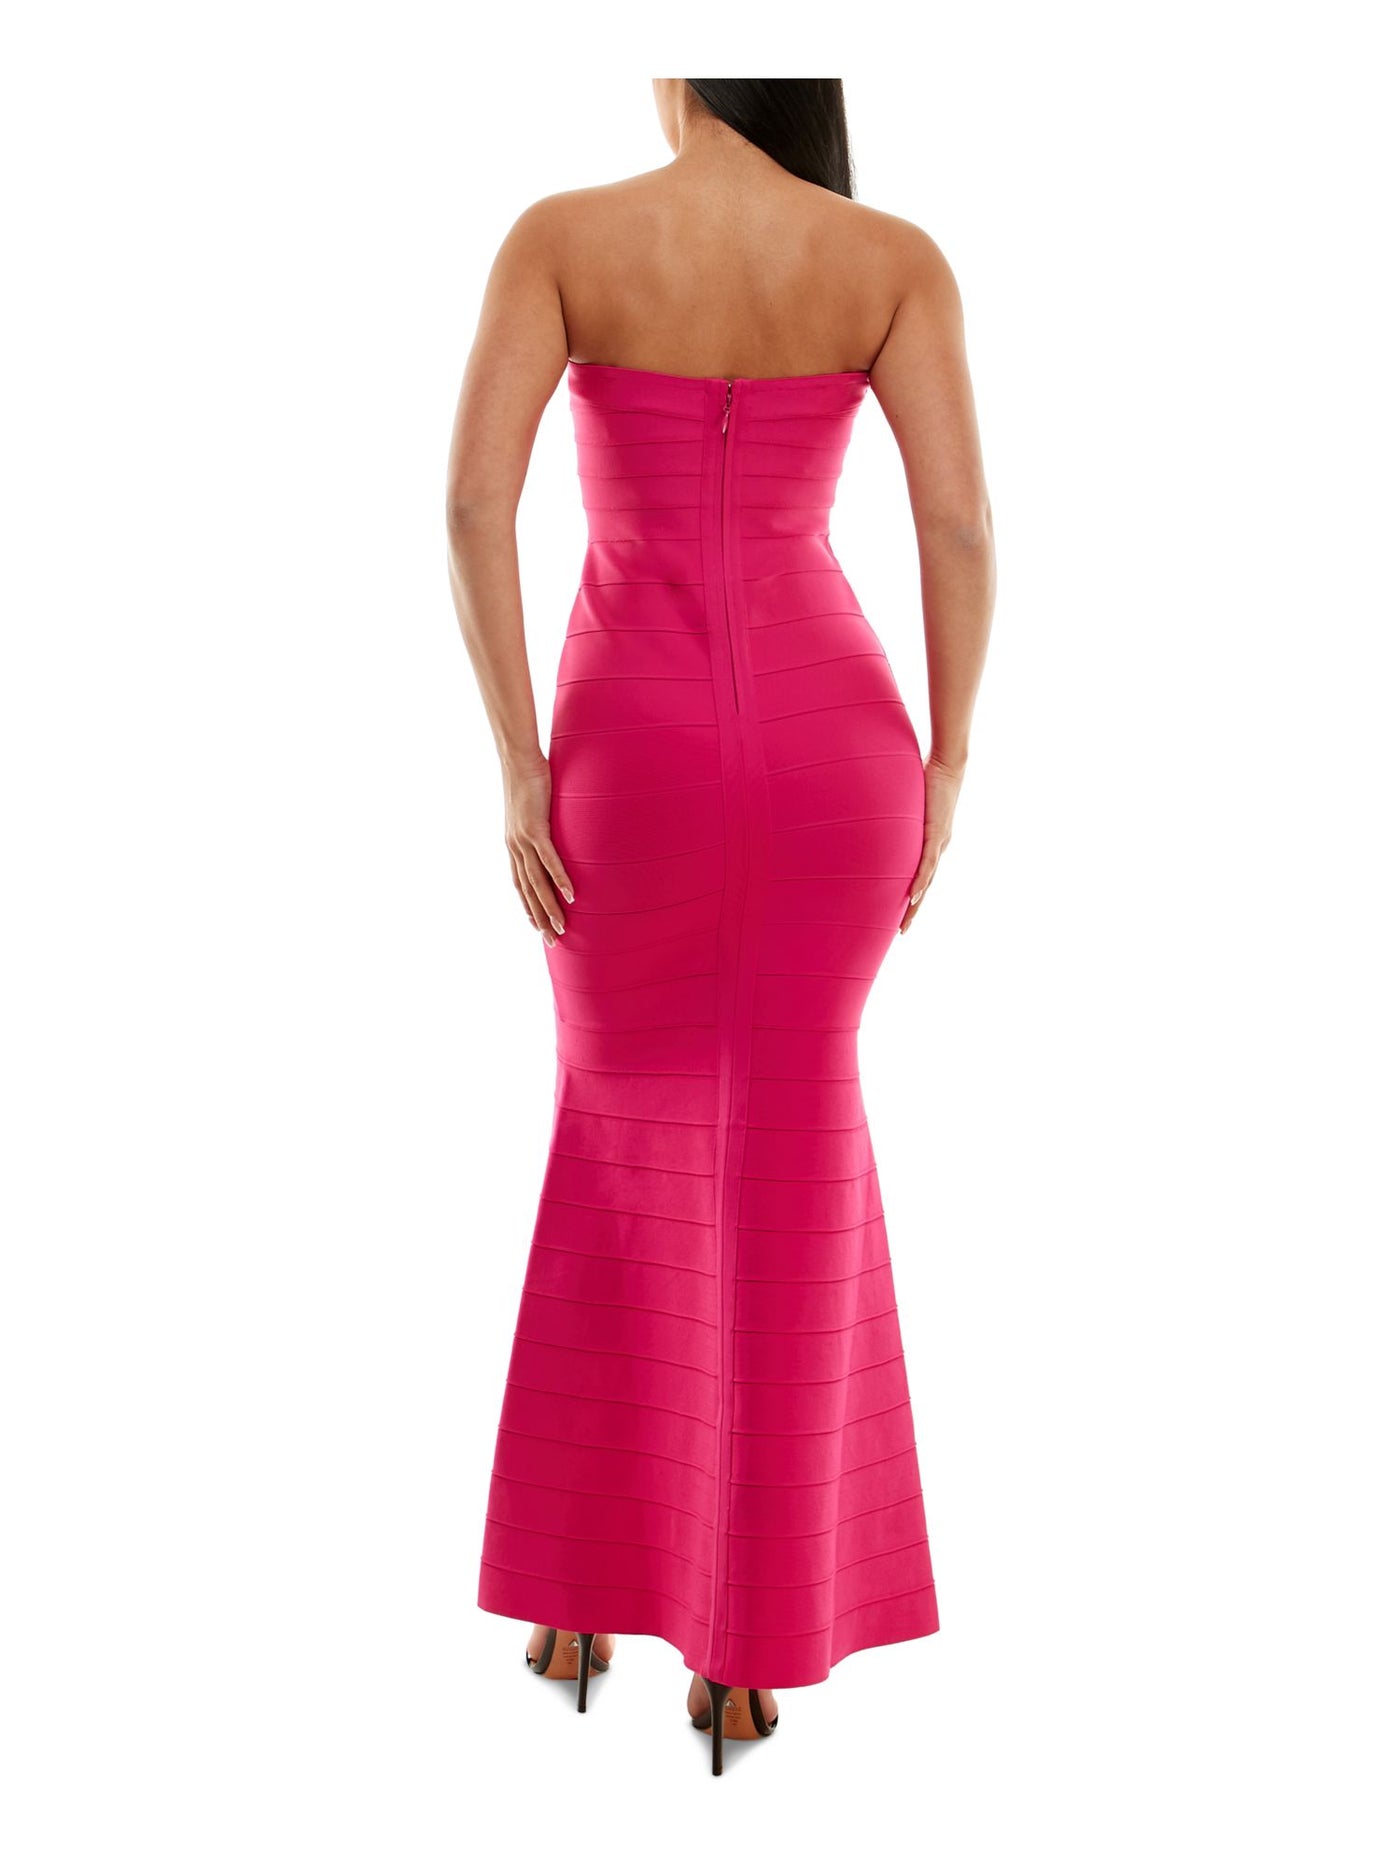 BEBE Womens Pink Zippered Unlined Sleeveless Strapless Full-Length Evening Gown Dress L